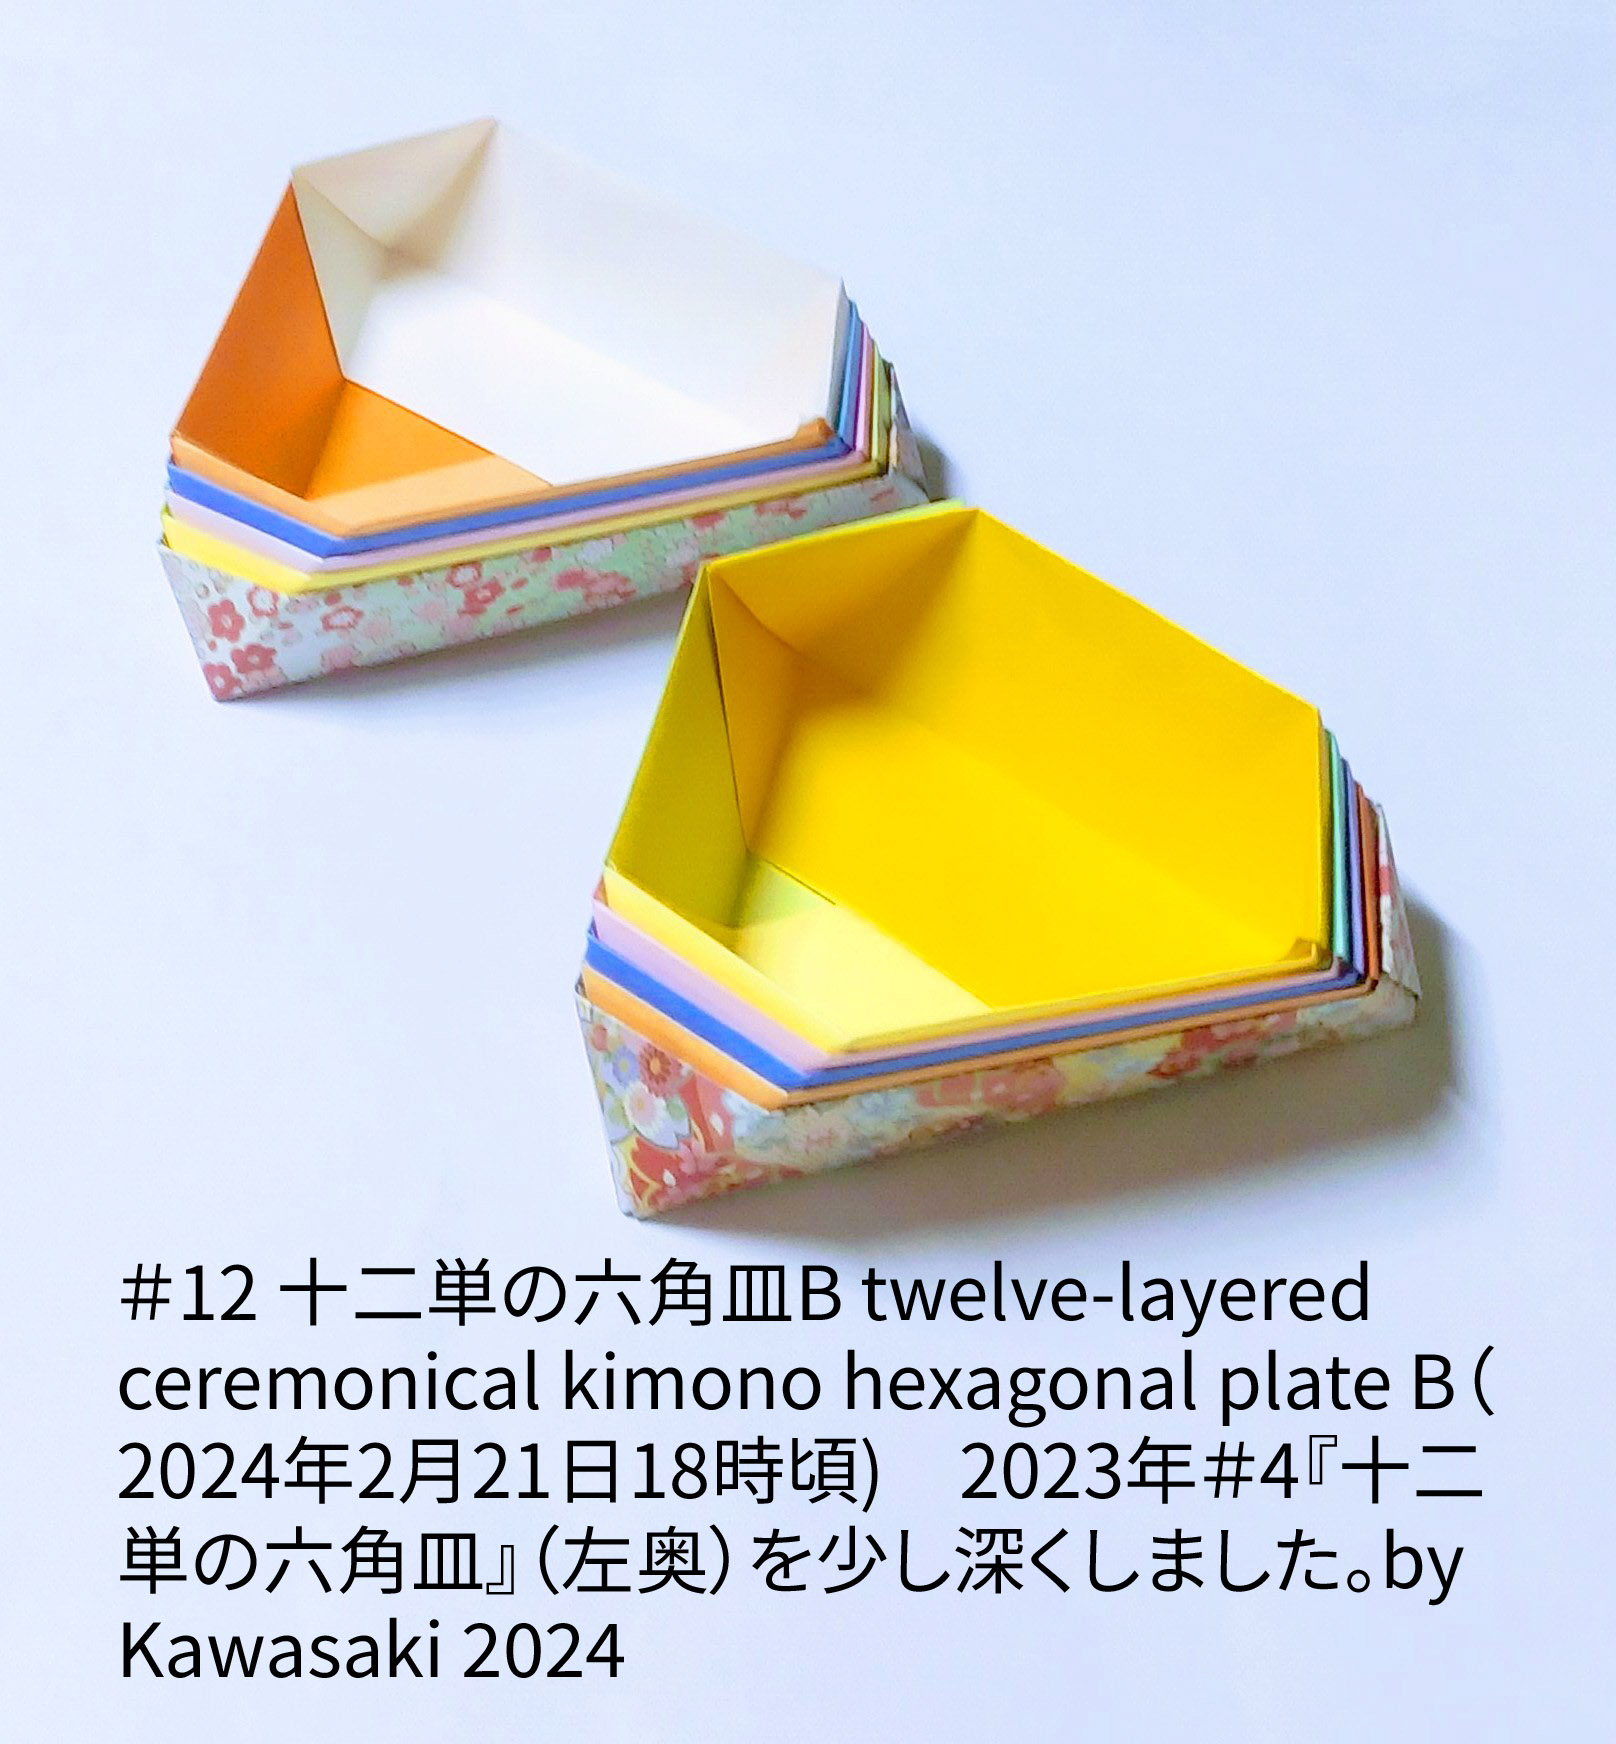 2024/02/22(Thu) 07:04「＃12 十二単の六角皿B twelve-layered ceremonical kimono hexagonal plate B（2024年2月21日18時頃)」川崎敏和 T.Kawasaki
（創作者 Author：川崎敏和 T.Kawasaki,　製作者 Folder：川崎敏和 T.Kawasaki ,　出典 Source：2024年川崎敏和折り紙キット＃12）
 2023年＃4『十二単の六角皿』（左奥）を少し深くしました。by Kawasaki 2024